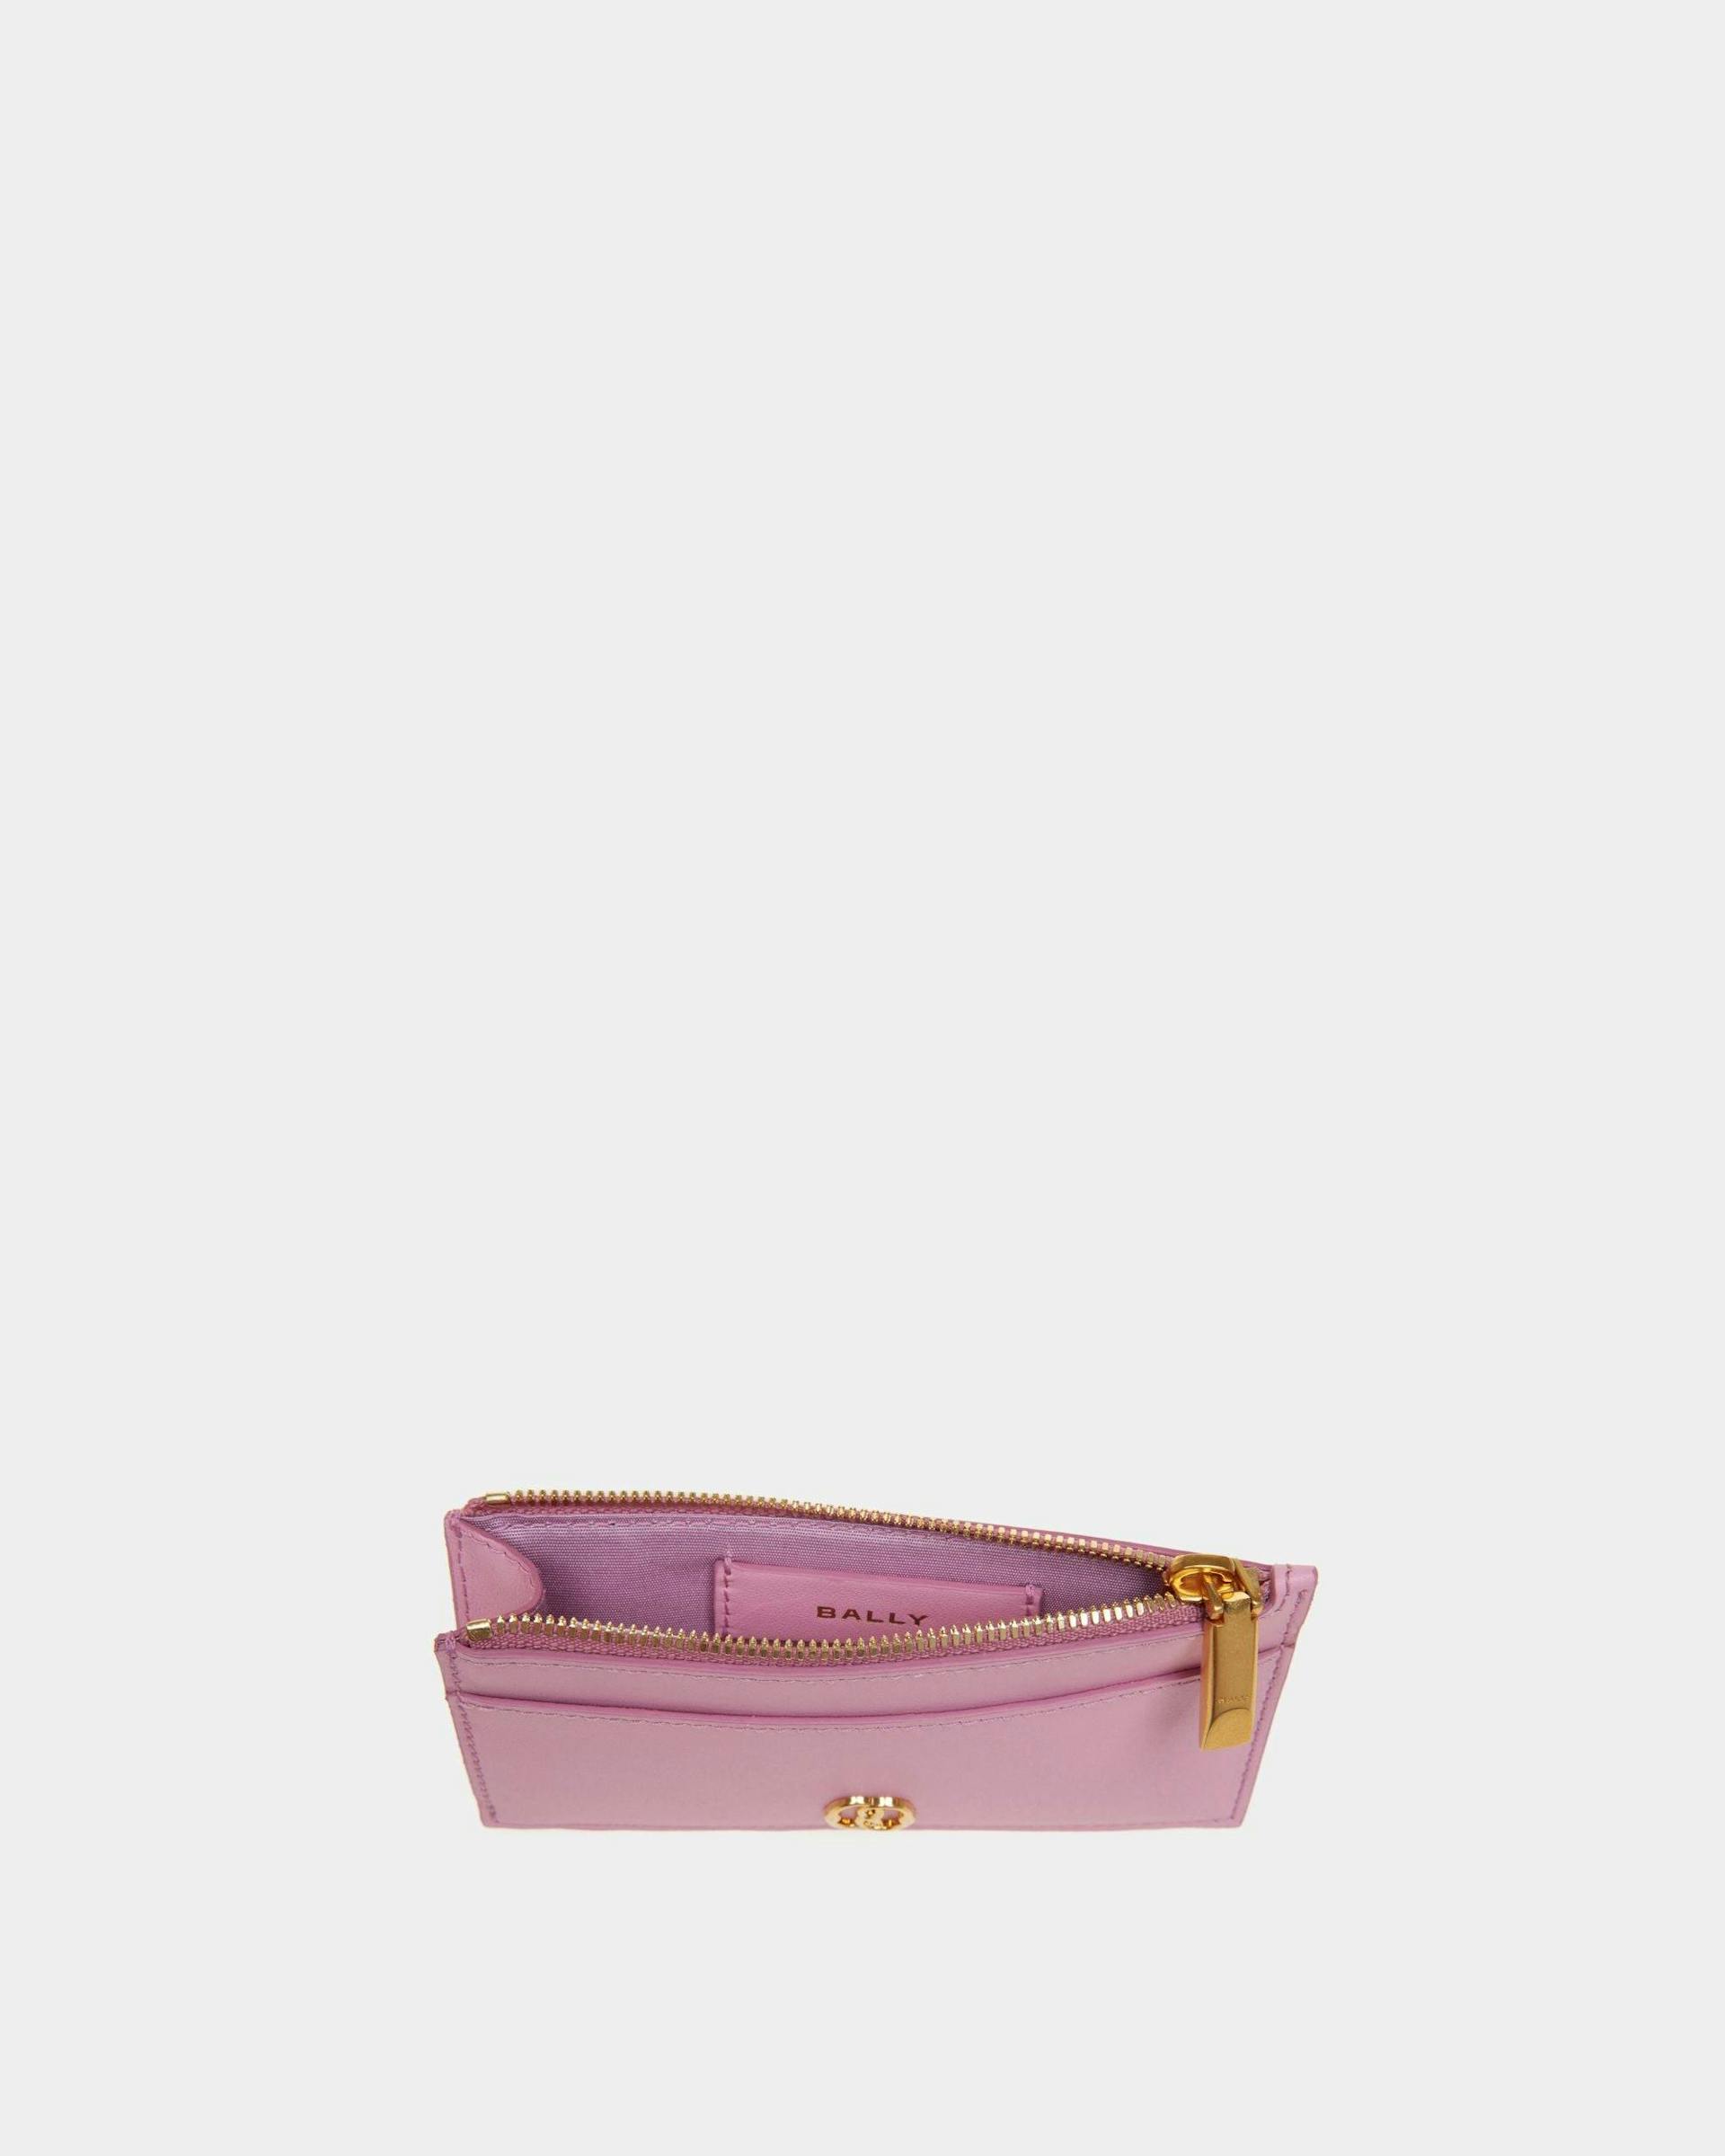 Women's Emblem Zipped Card Holder in Pink Leather | Bally | Still Life Open / Inside